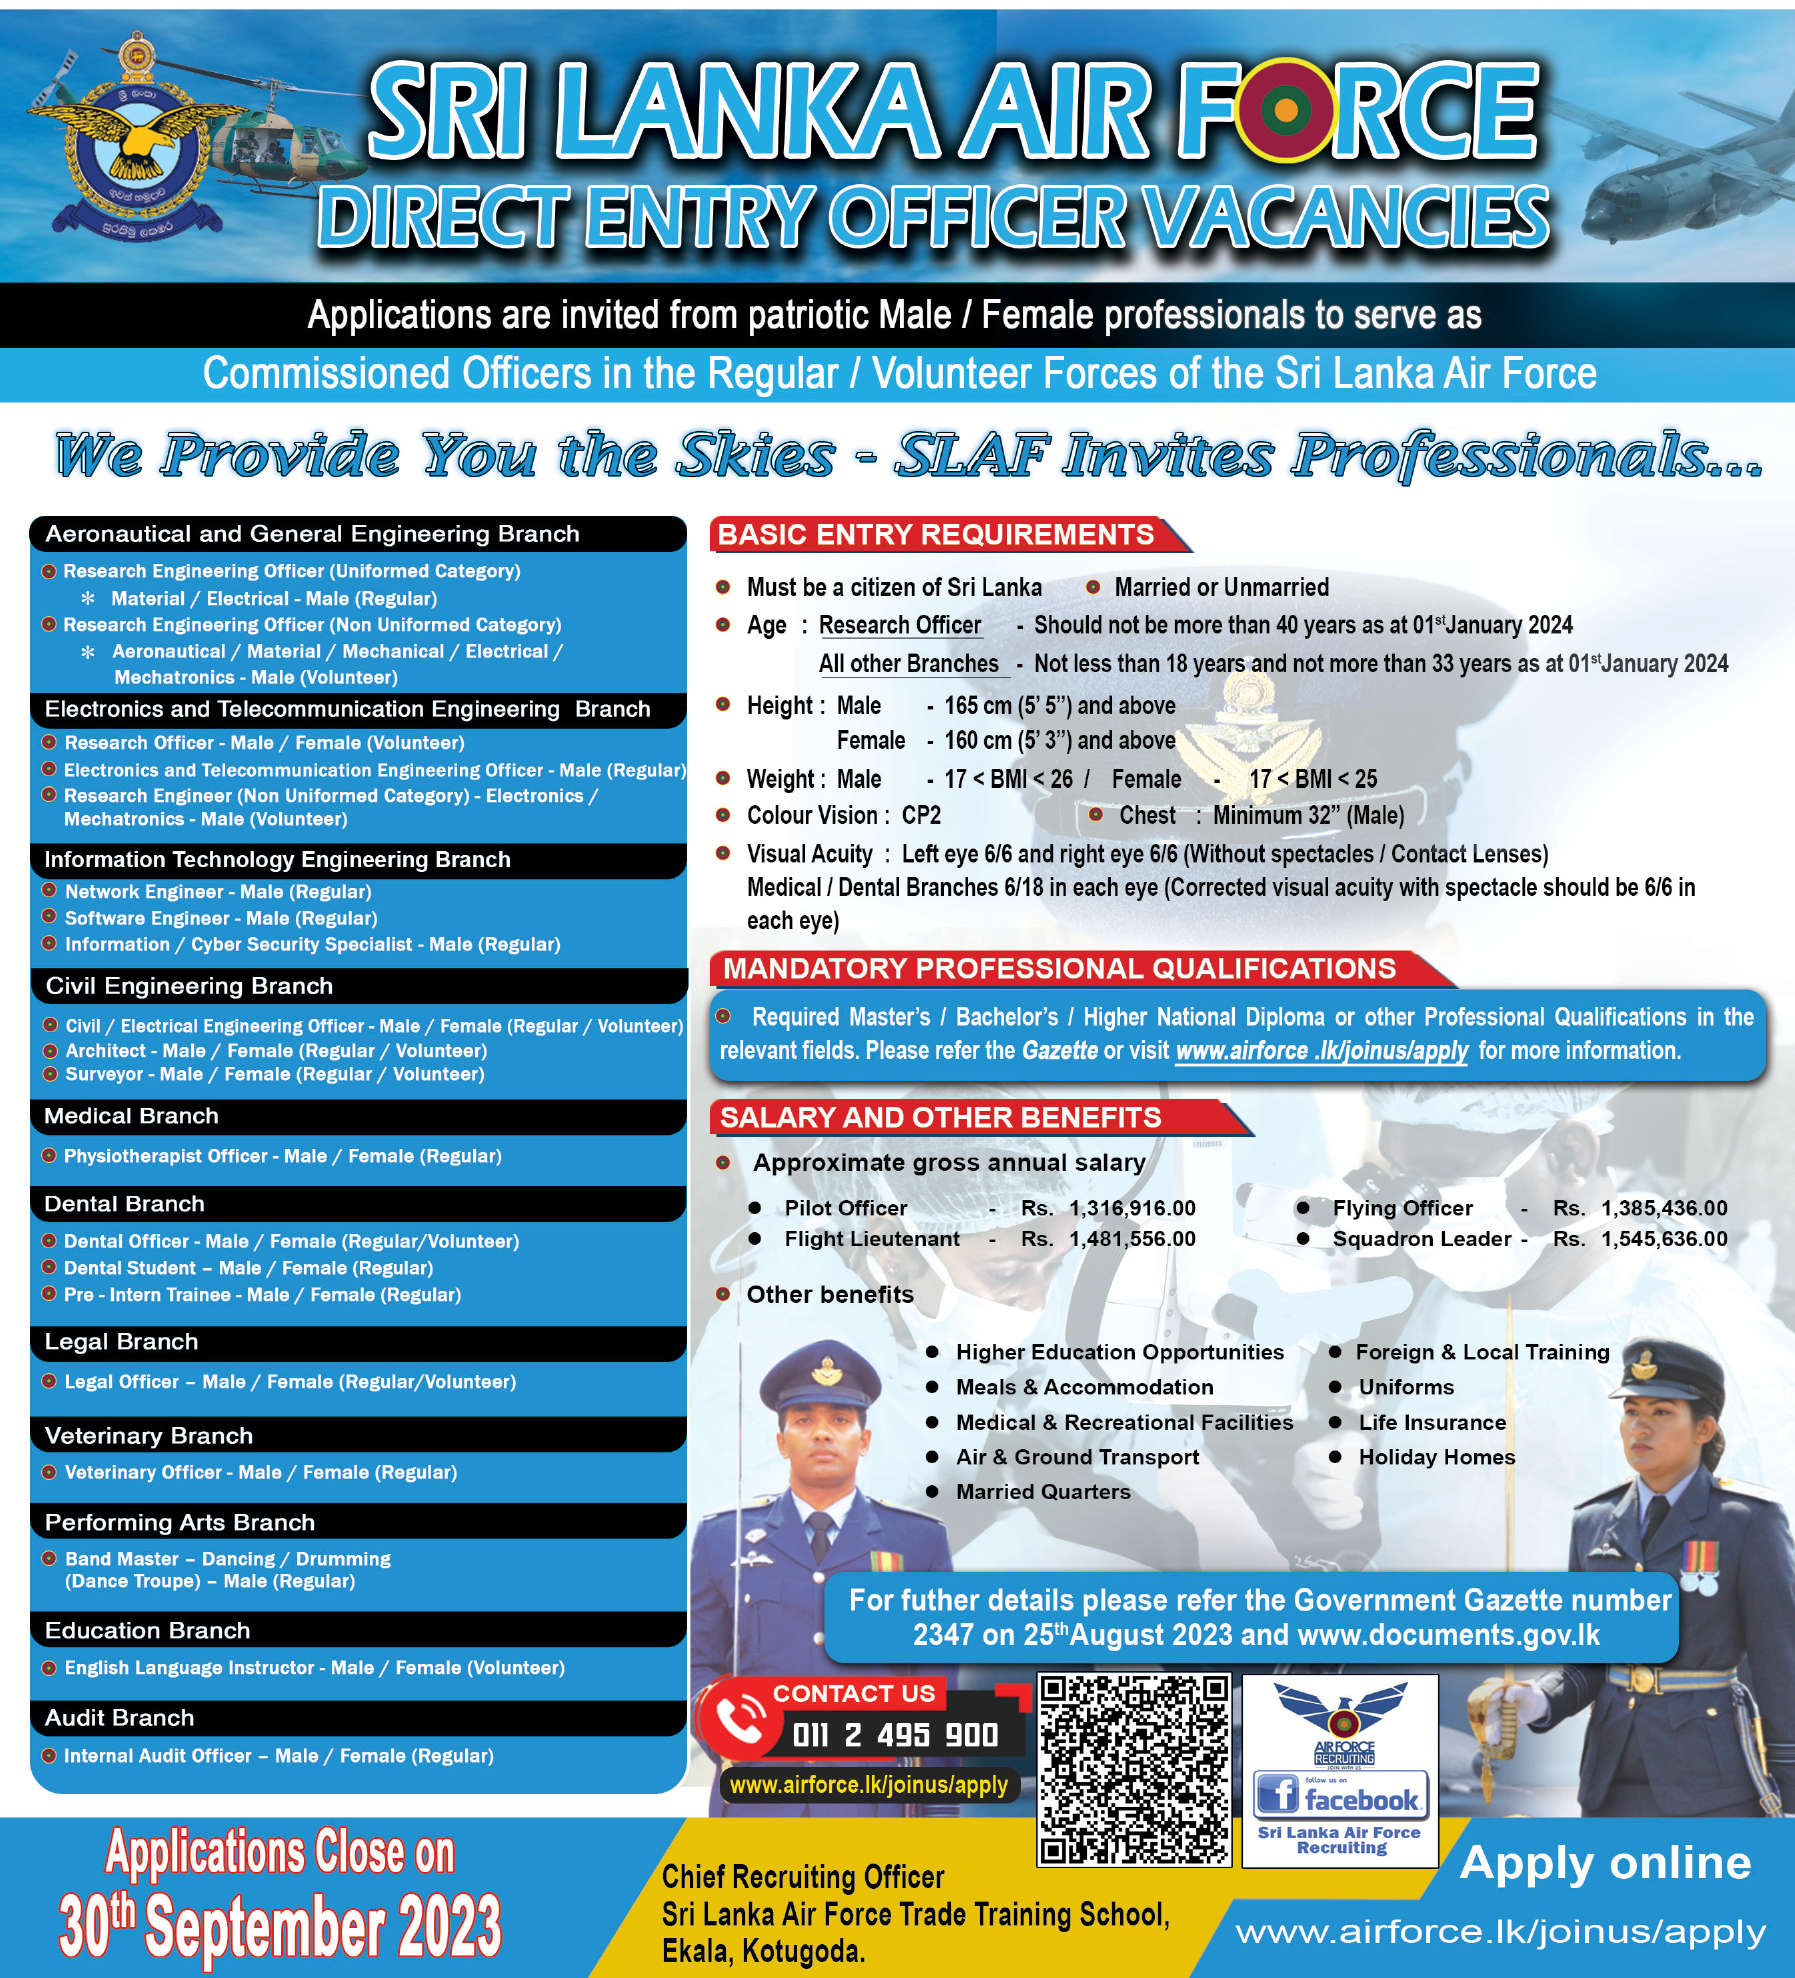 Sri Lanka Air Force Direct Entry Officer Vacancies 2023